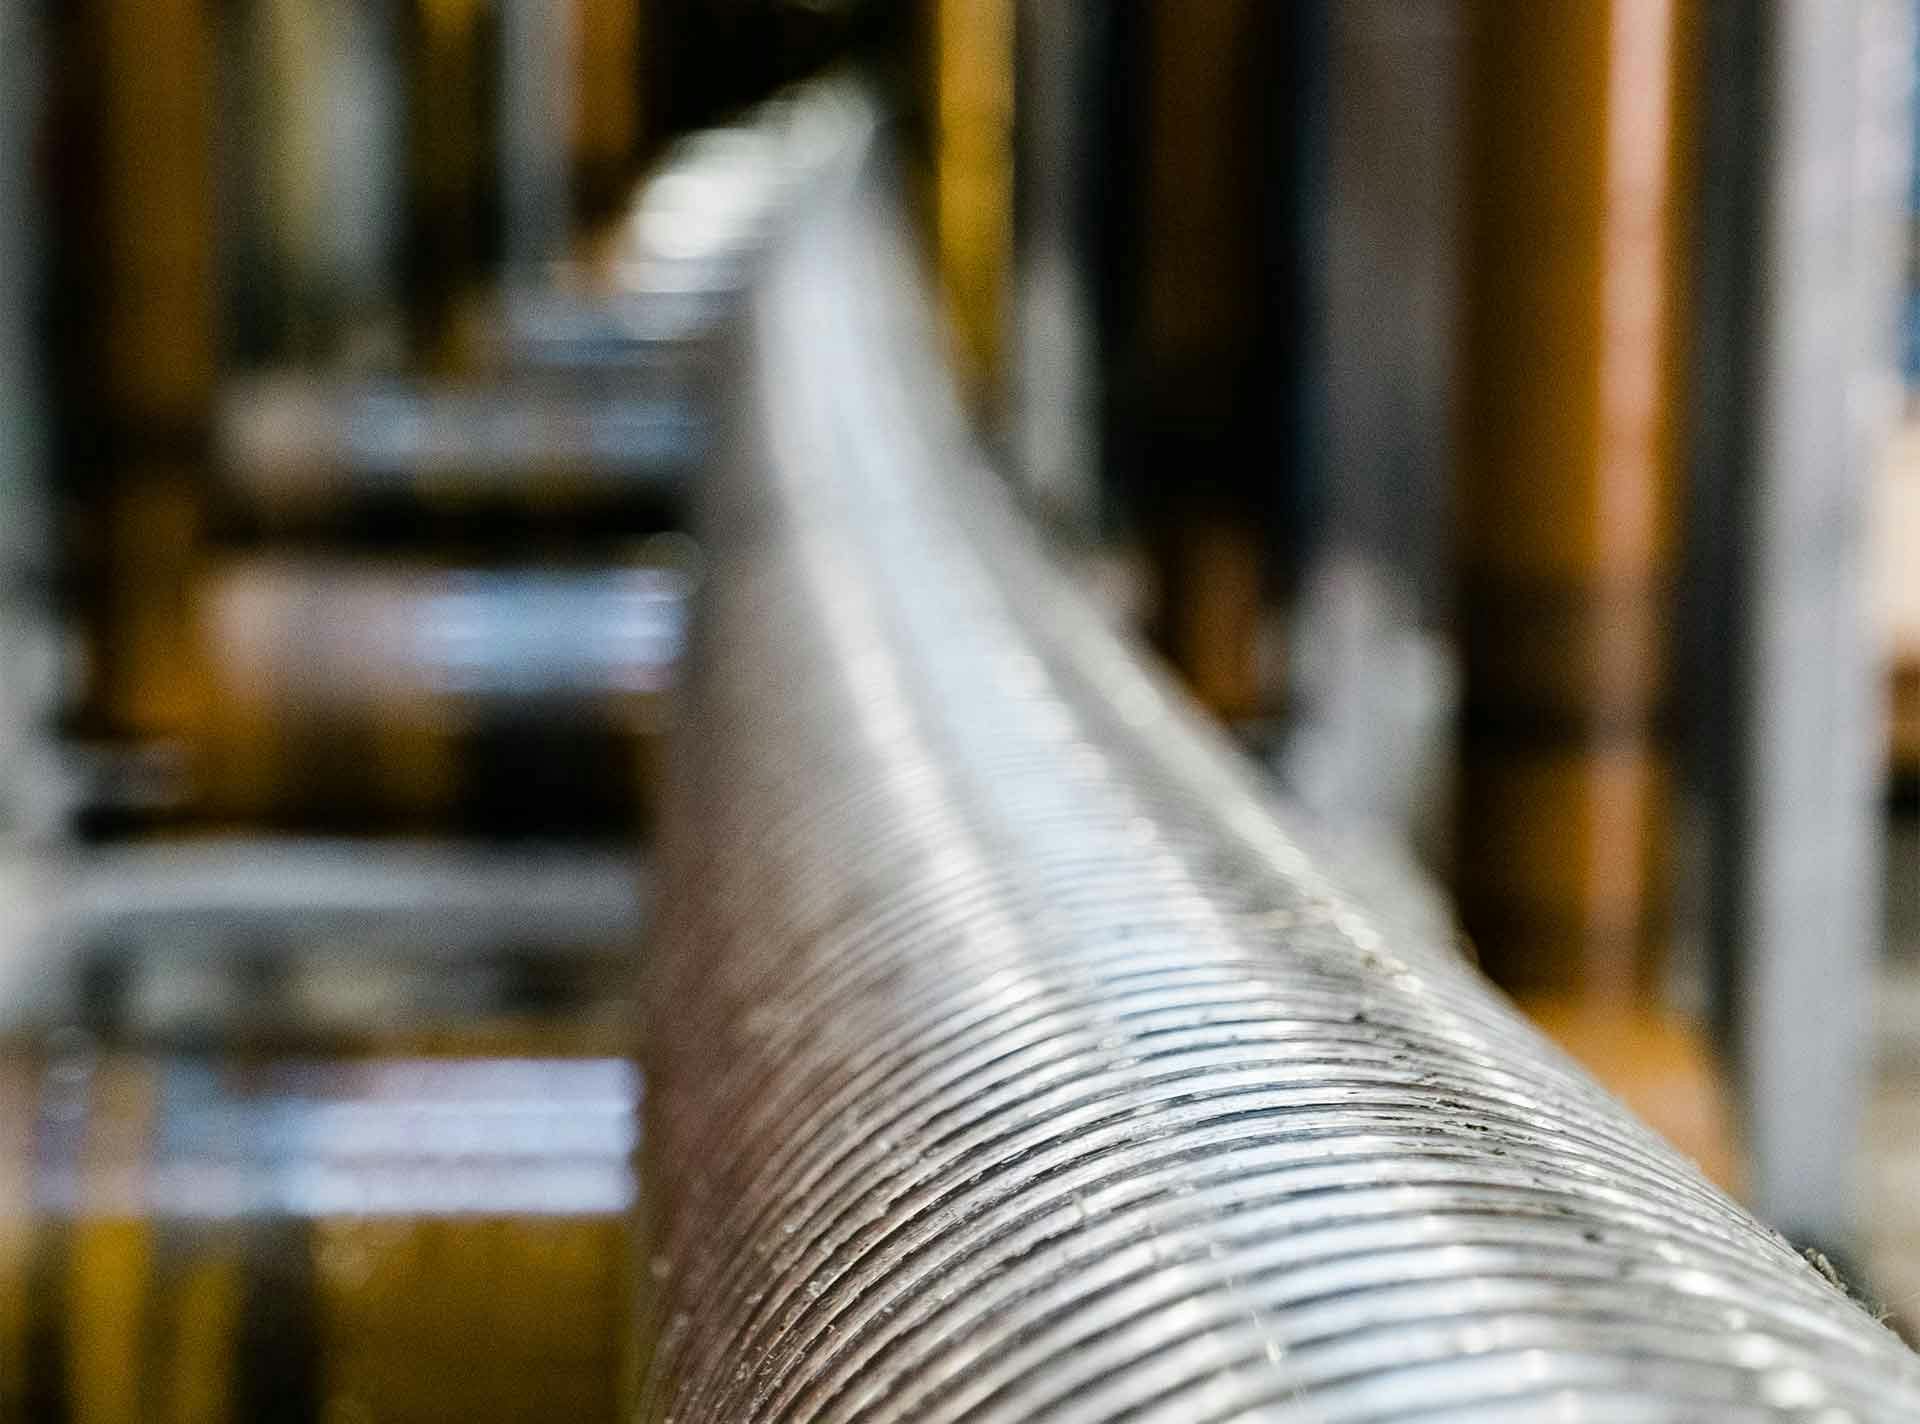 Closeup of Silver pipe